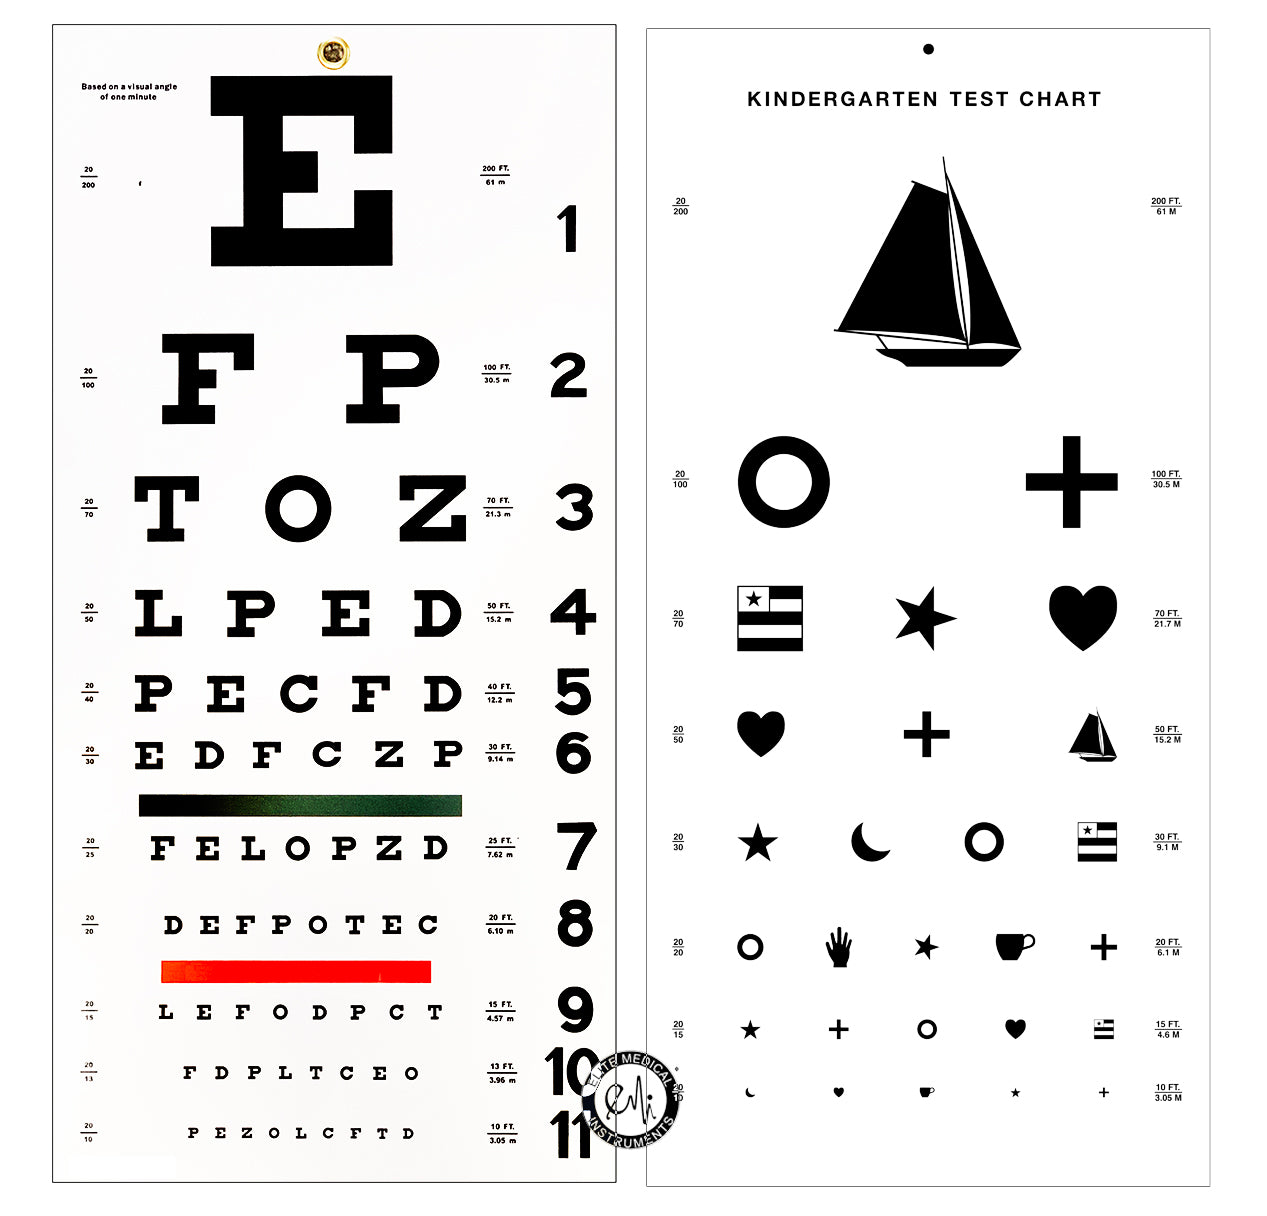 Snellen AND Kindergarten / Children Plastic Eye Vision Exam Test Wall Charts 22 by 11 in. - 10 Set Pack (10 Snellen and 10 Kindergarten )